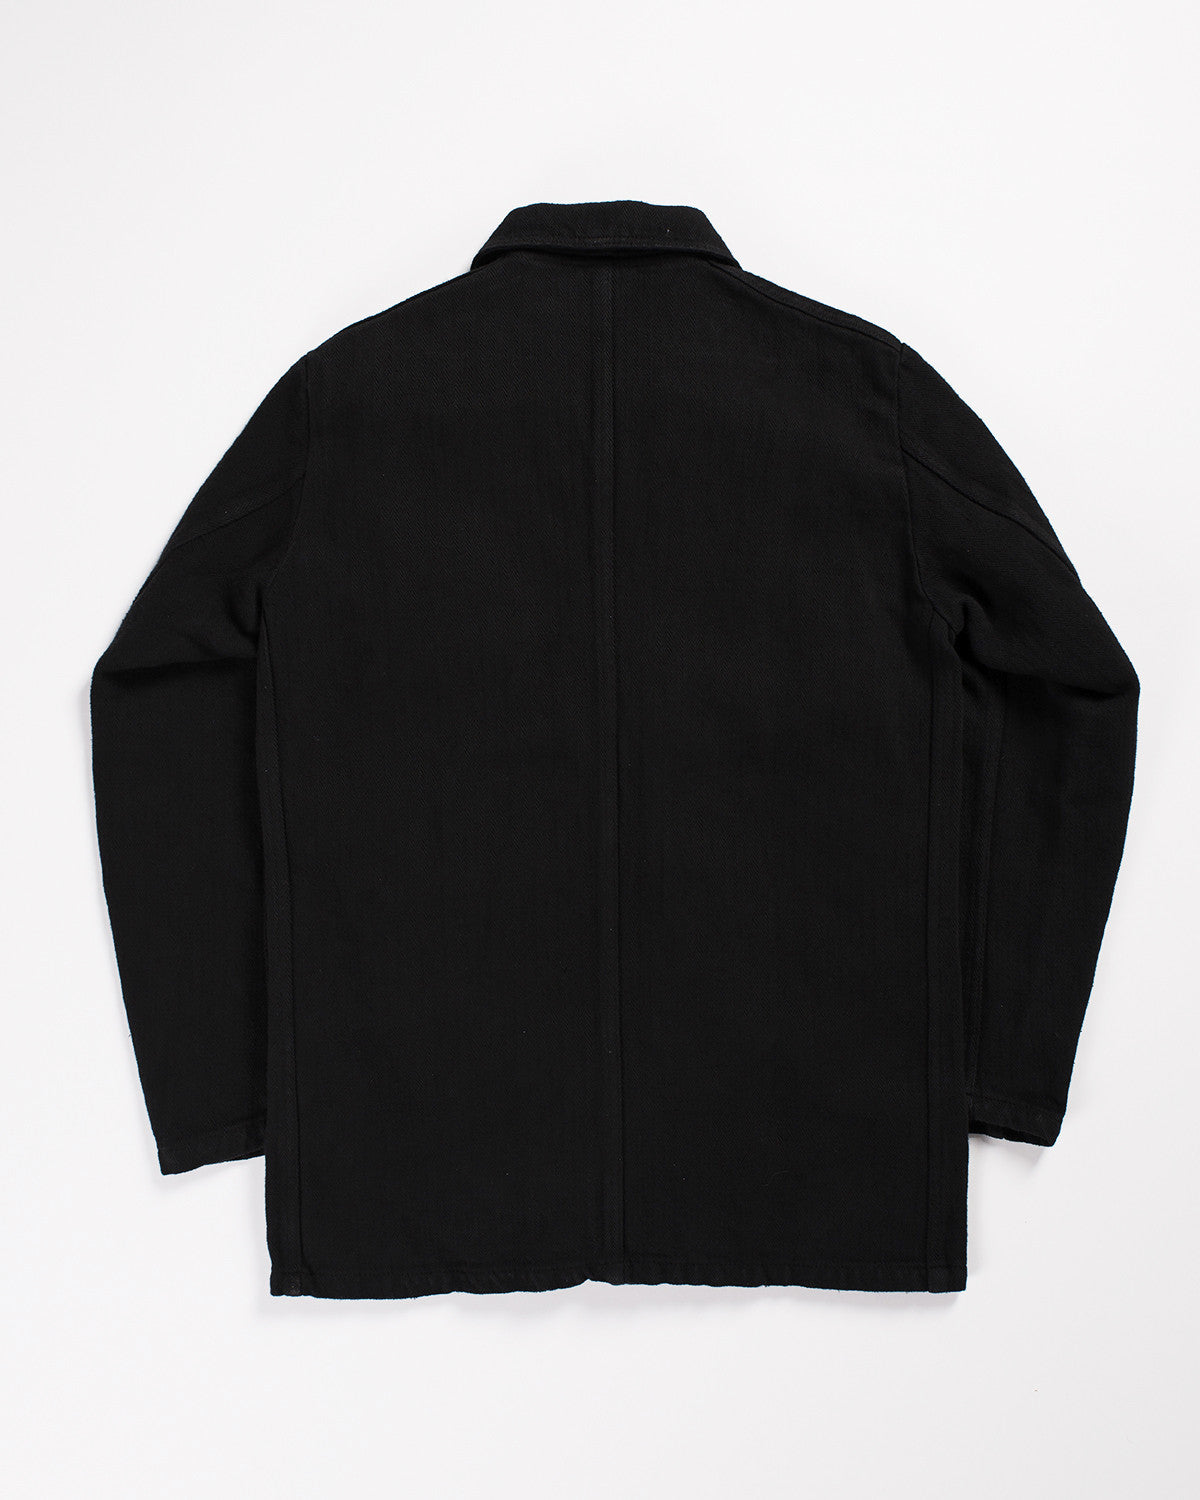 Vetra Work Jacket Overdyed Black Herringbone – Hand-Eye Supply